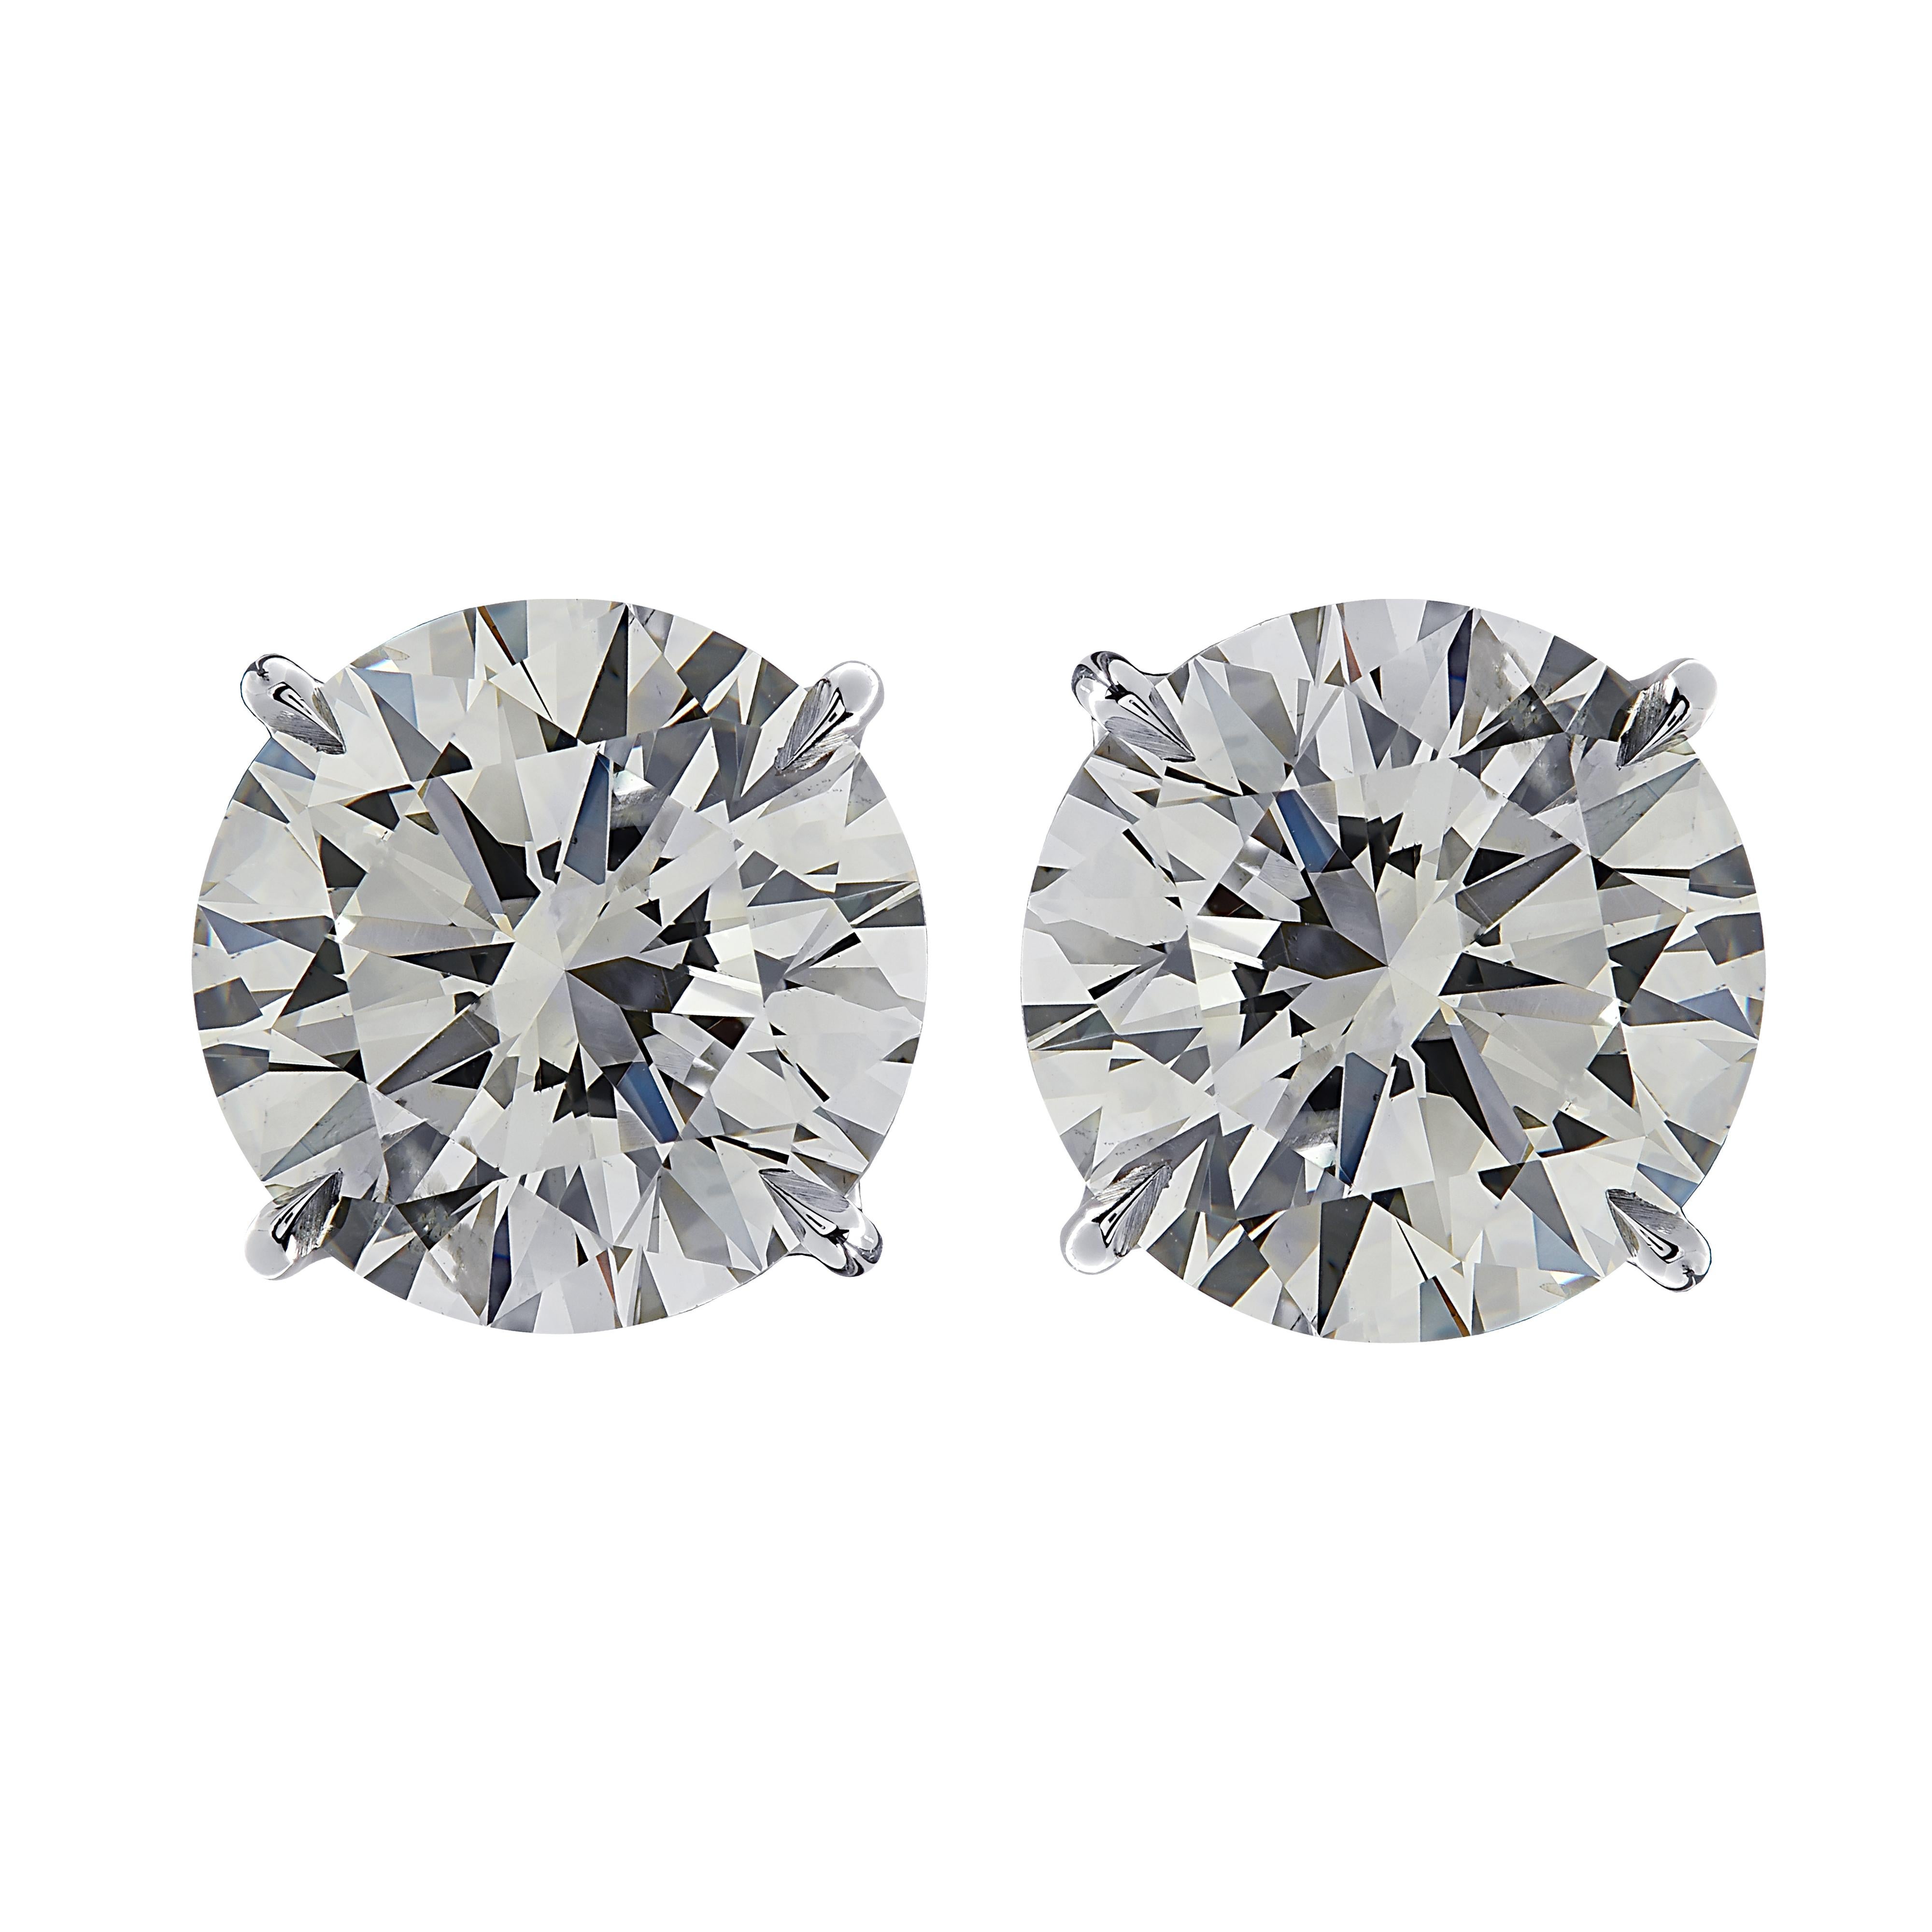 Modern Vivid Diamonds GIA Certified 6.01 Carat Diamond Solitaire Stud Earrings For Sale